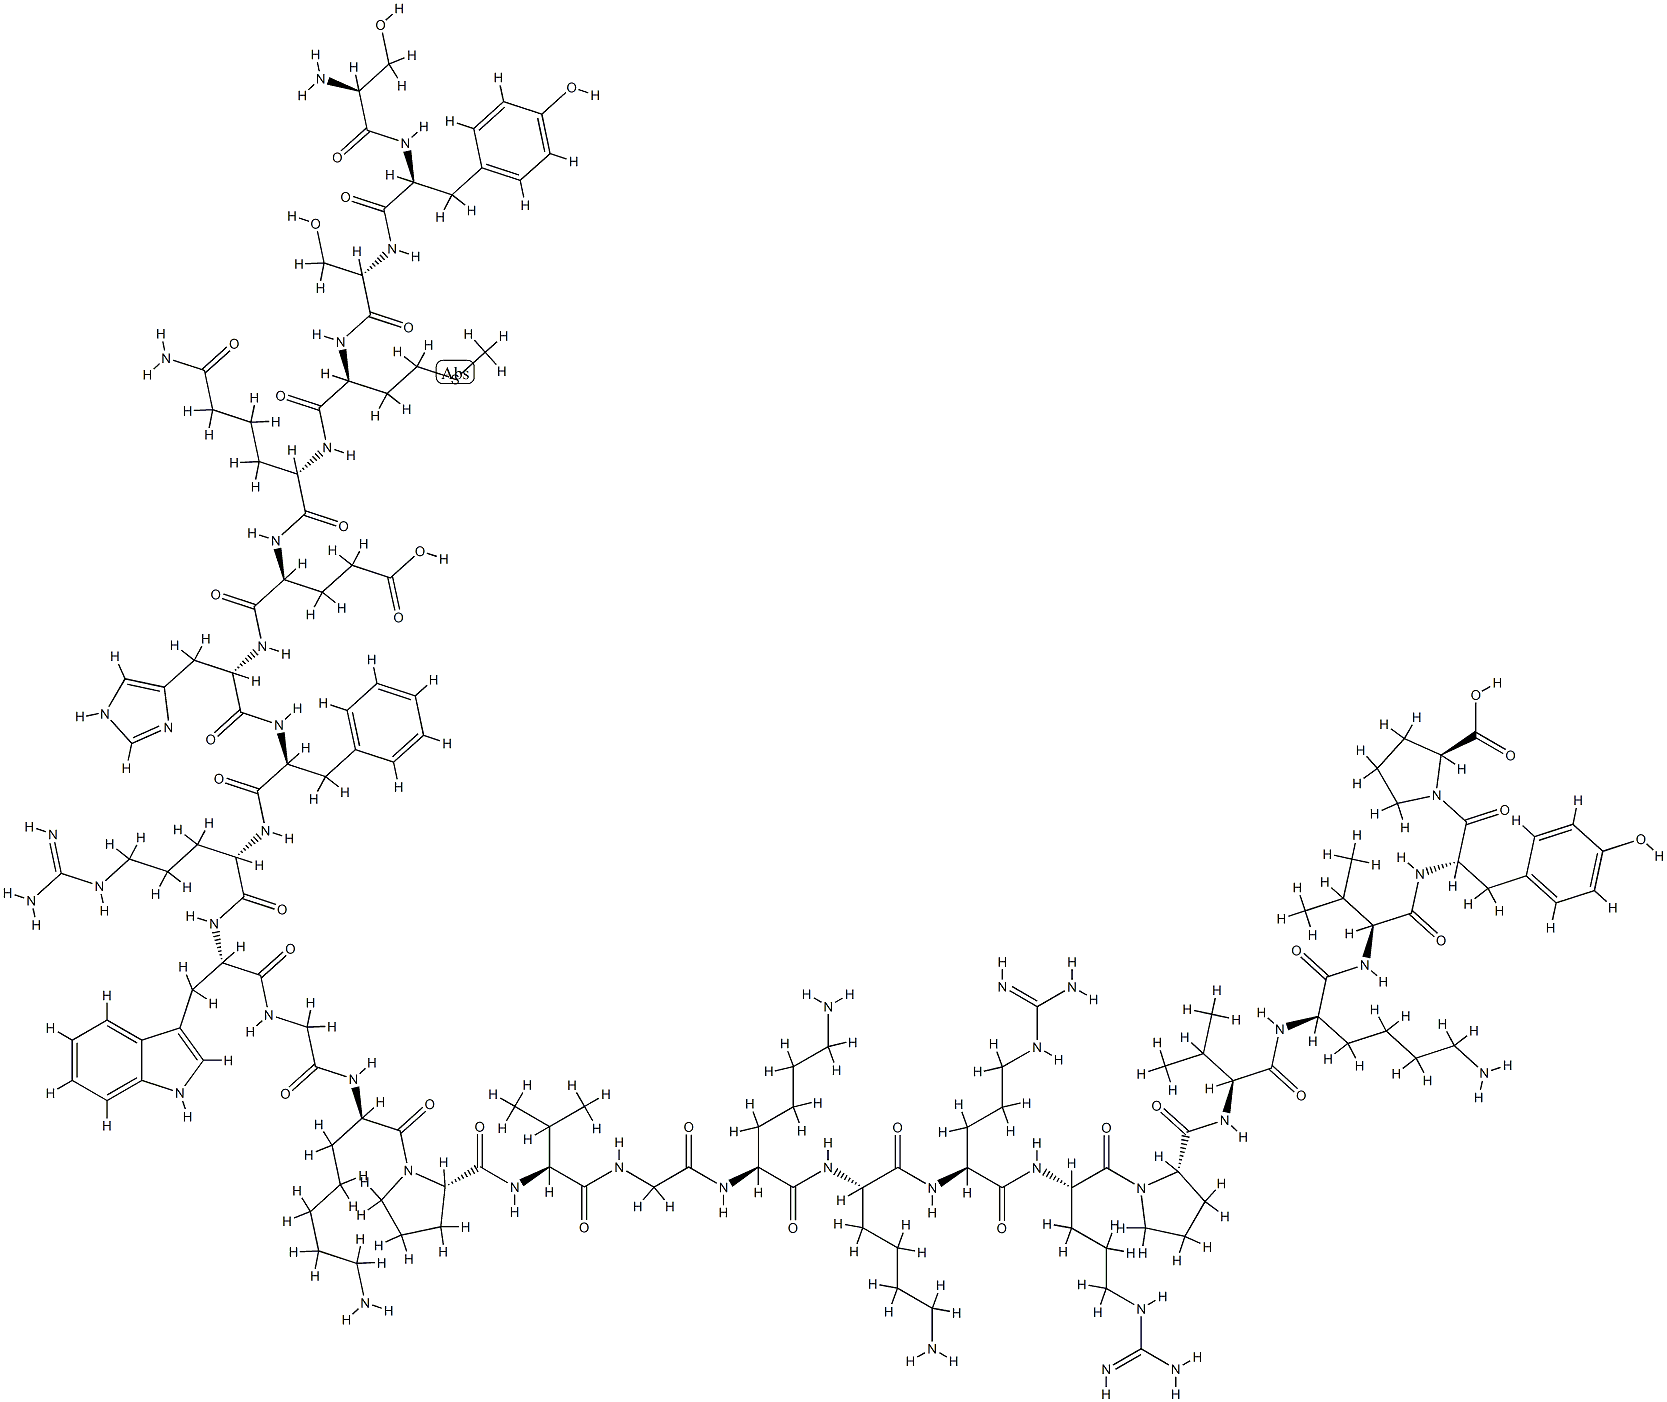 Endo-4a-Glu-ACTH (1-24) (human, bovine, rat) Structure